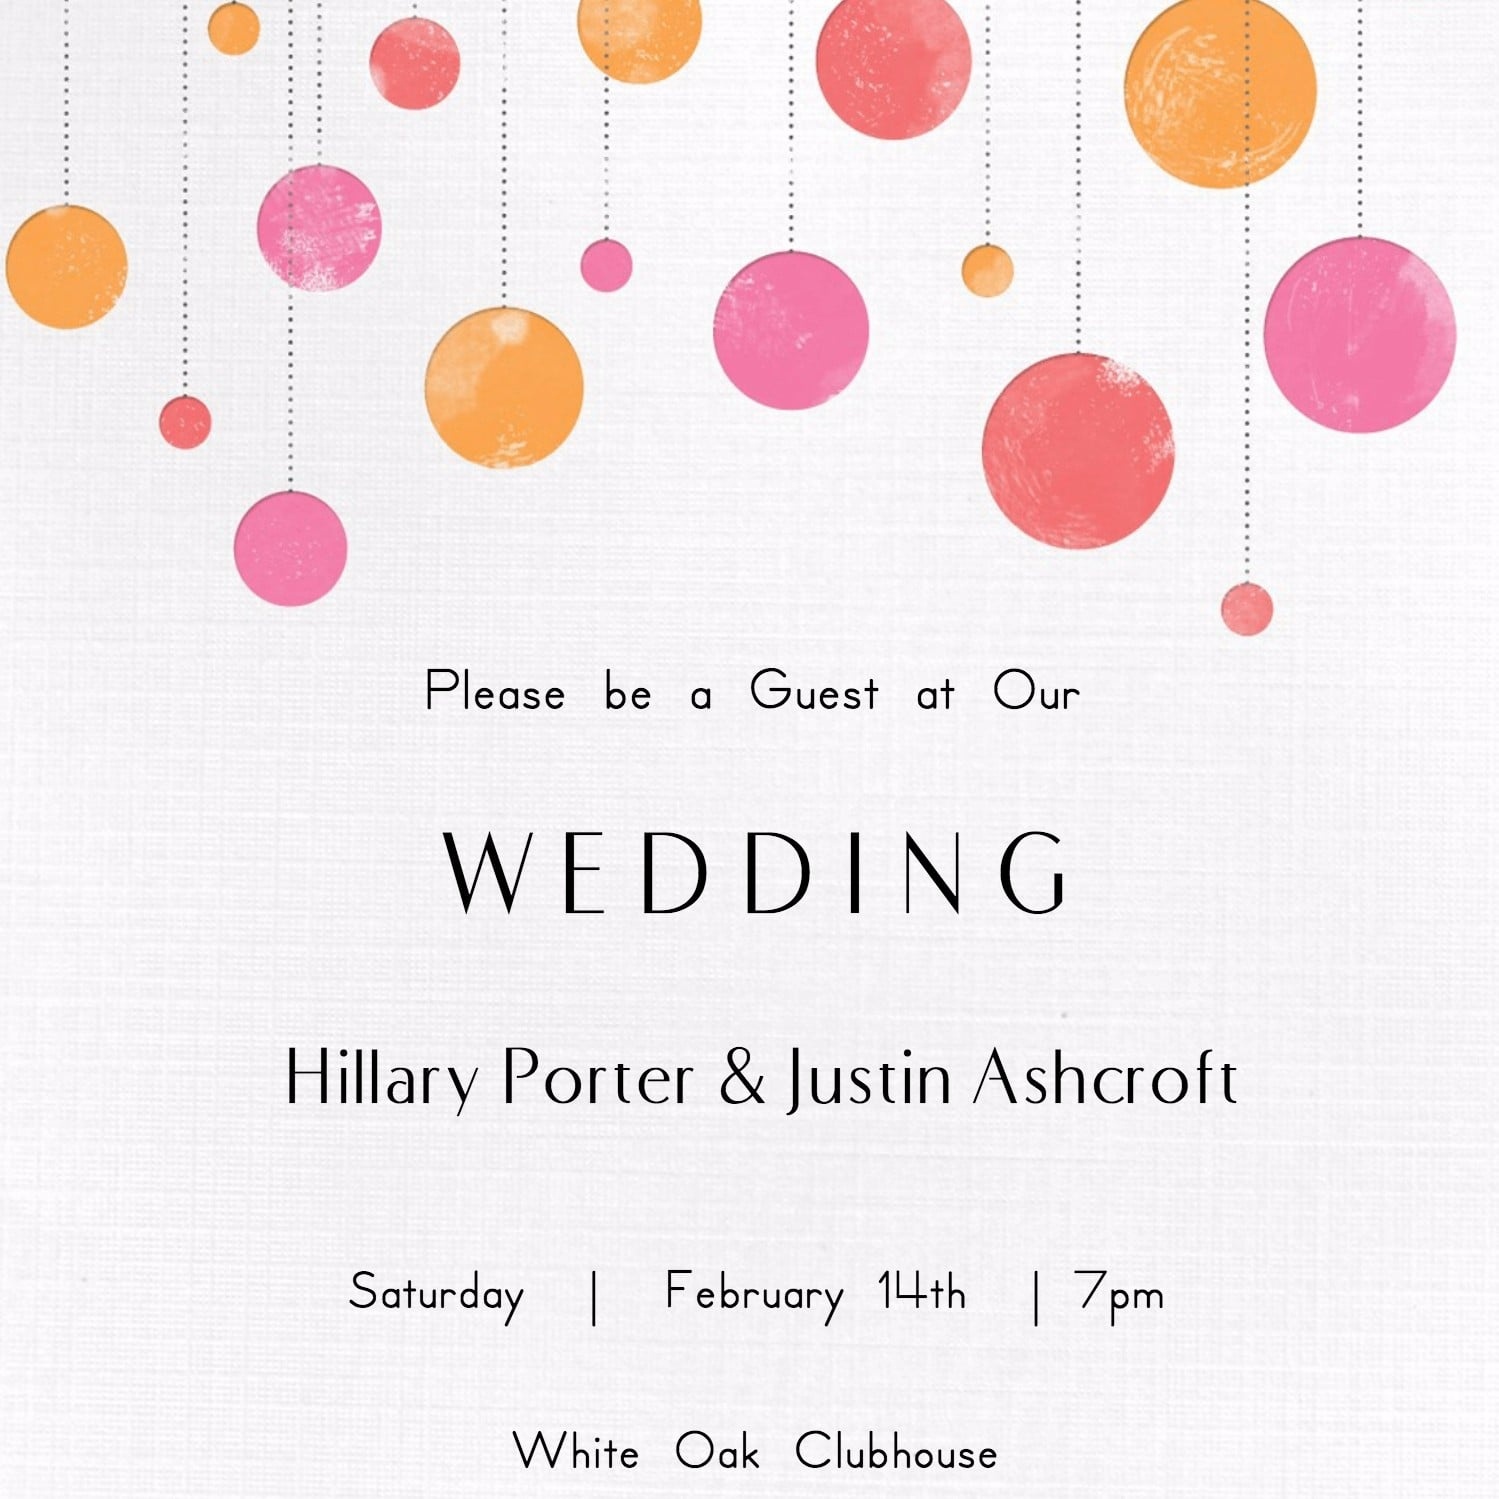 Free Printable Wedding Invitations | Popsugar Smart Living - Free Printable Halloween Wedding Invitations